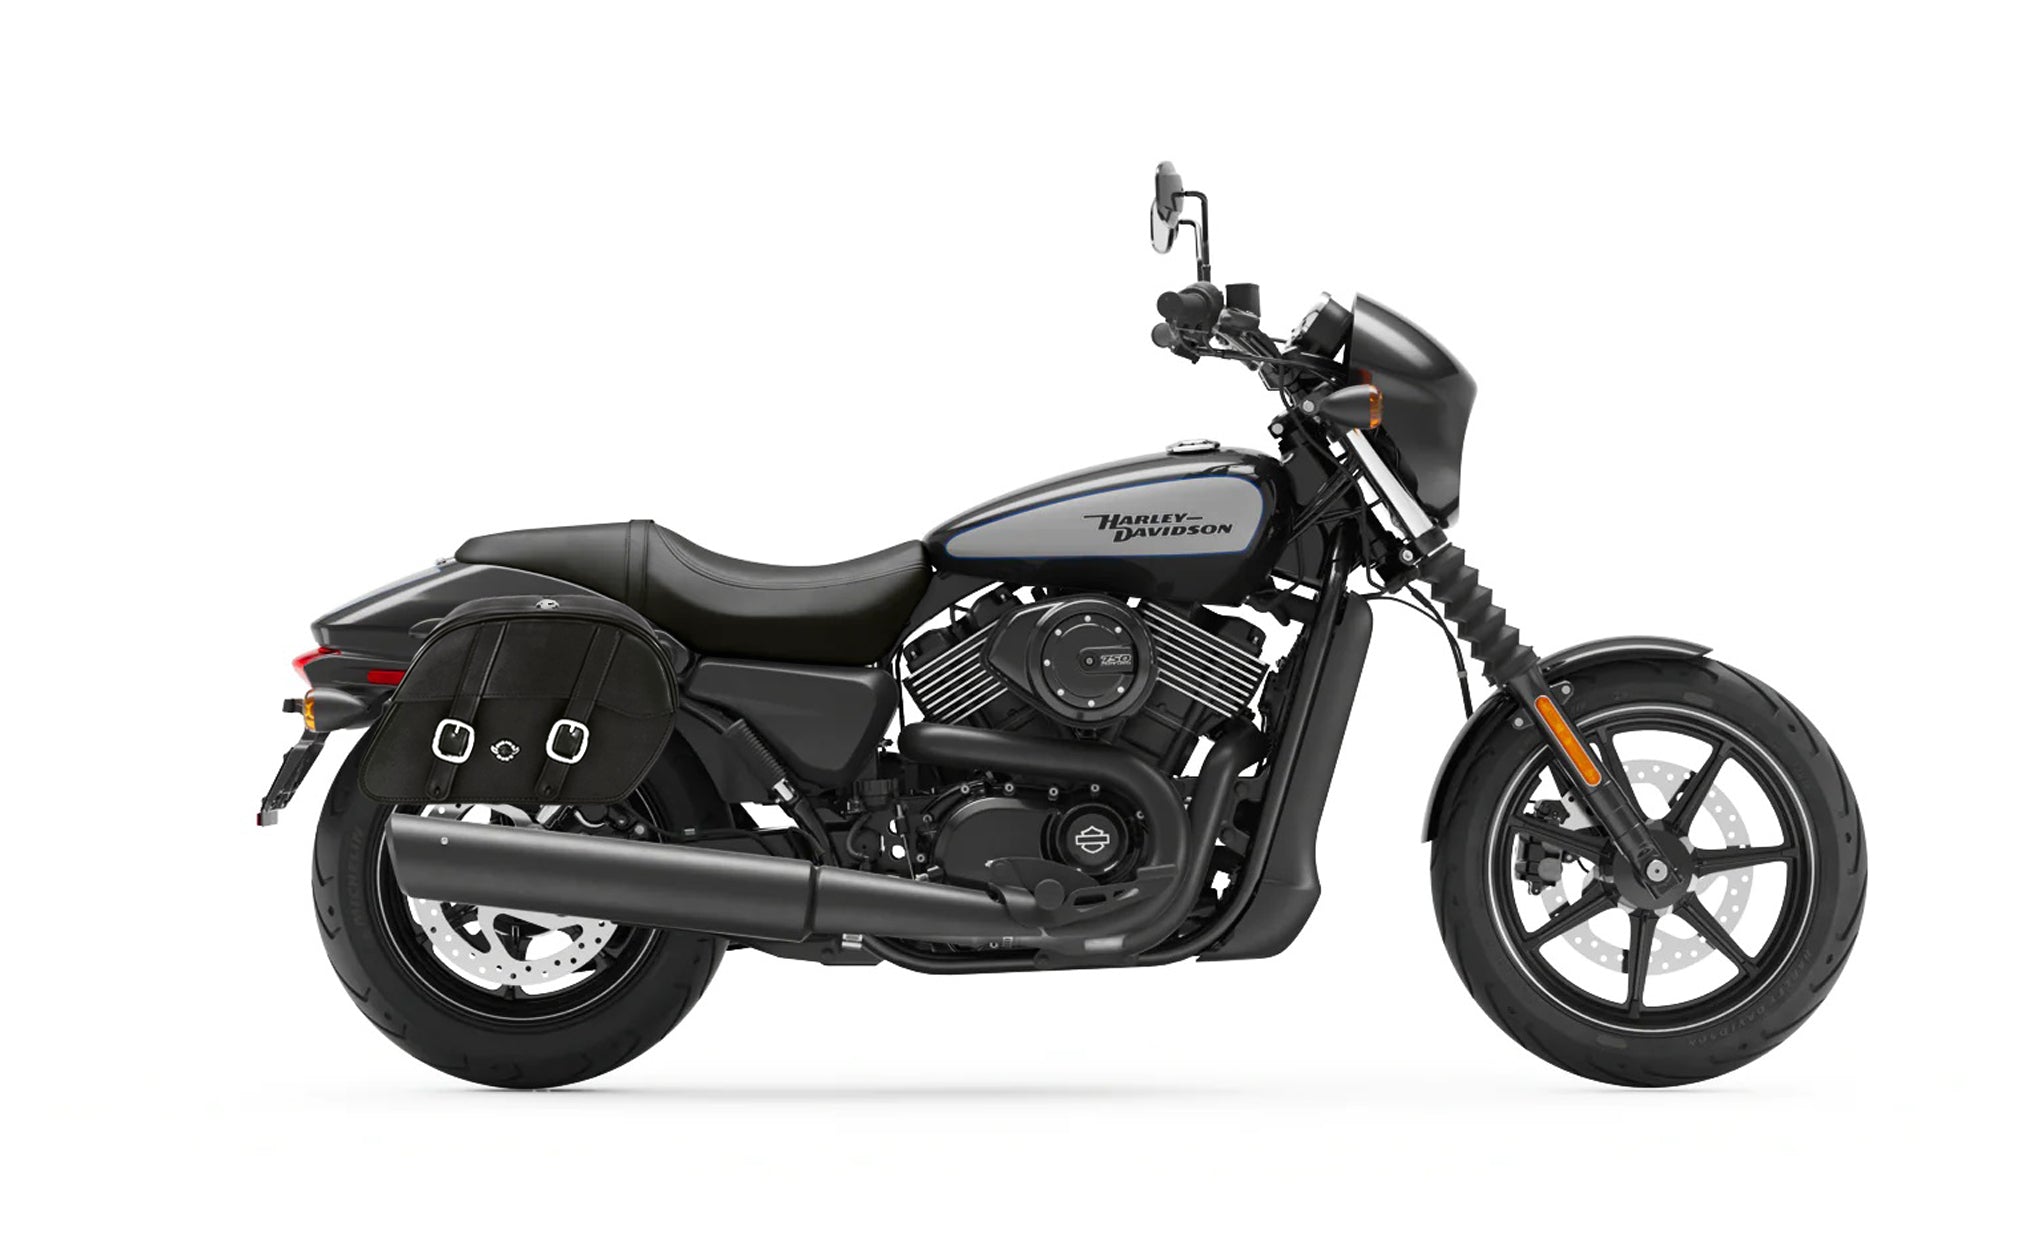 Viking Skarner Large Shock Cut Out Leather Motorcycle Saddlebags For Harley Street 750 on Bike Photo @expand